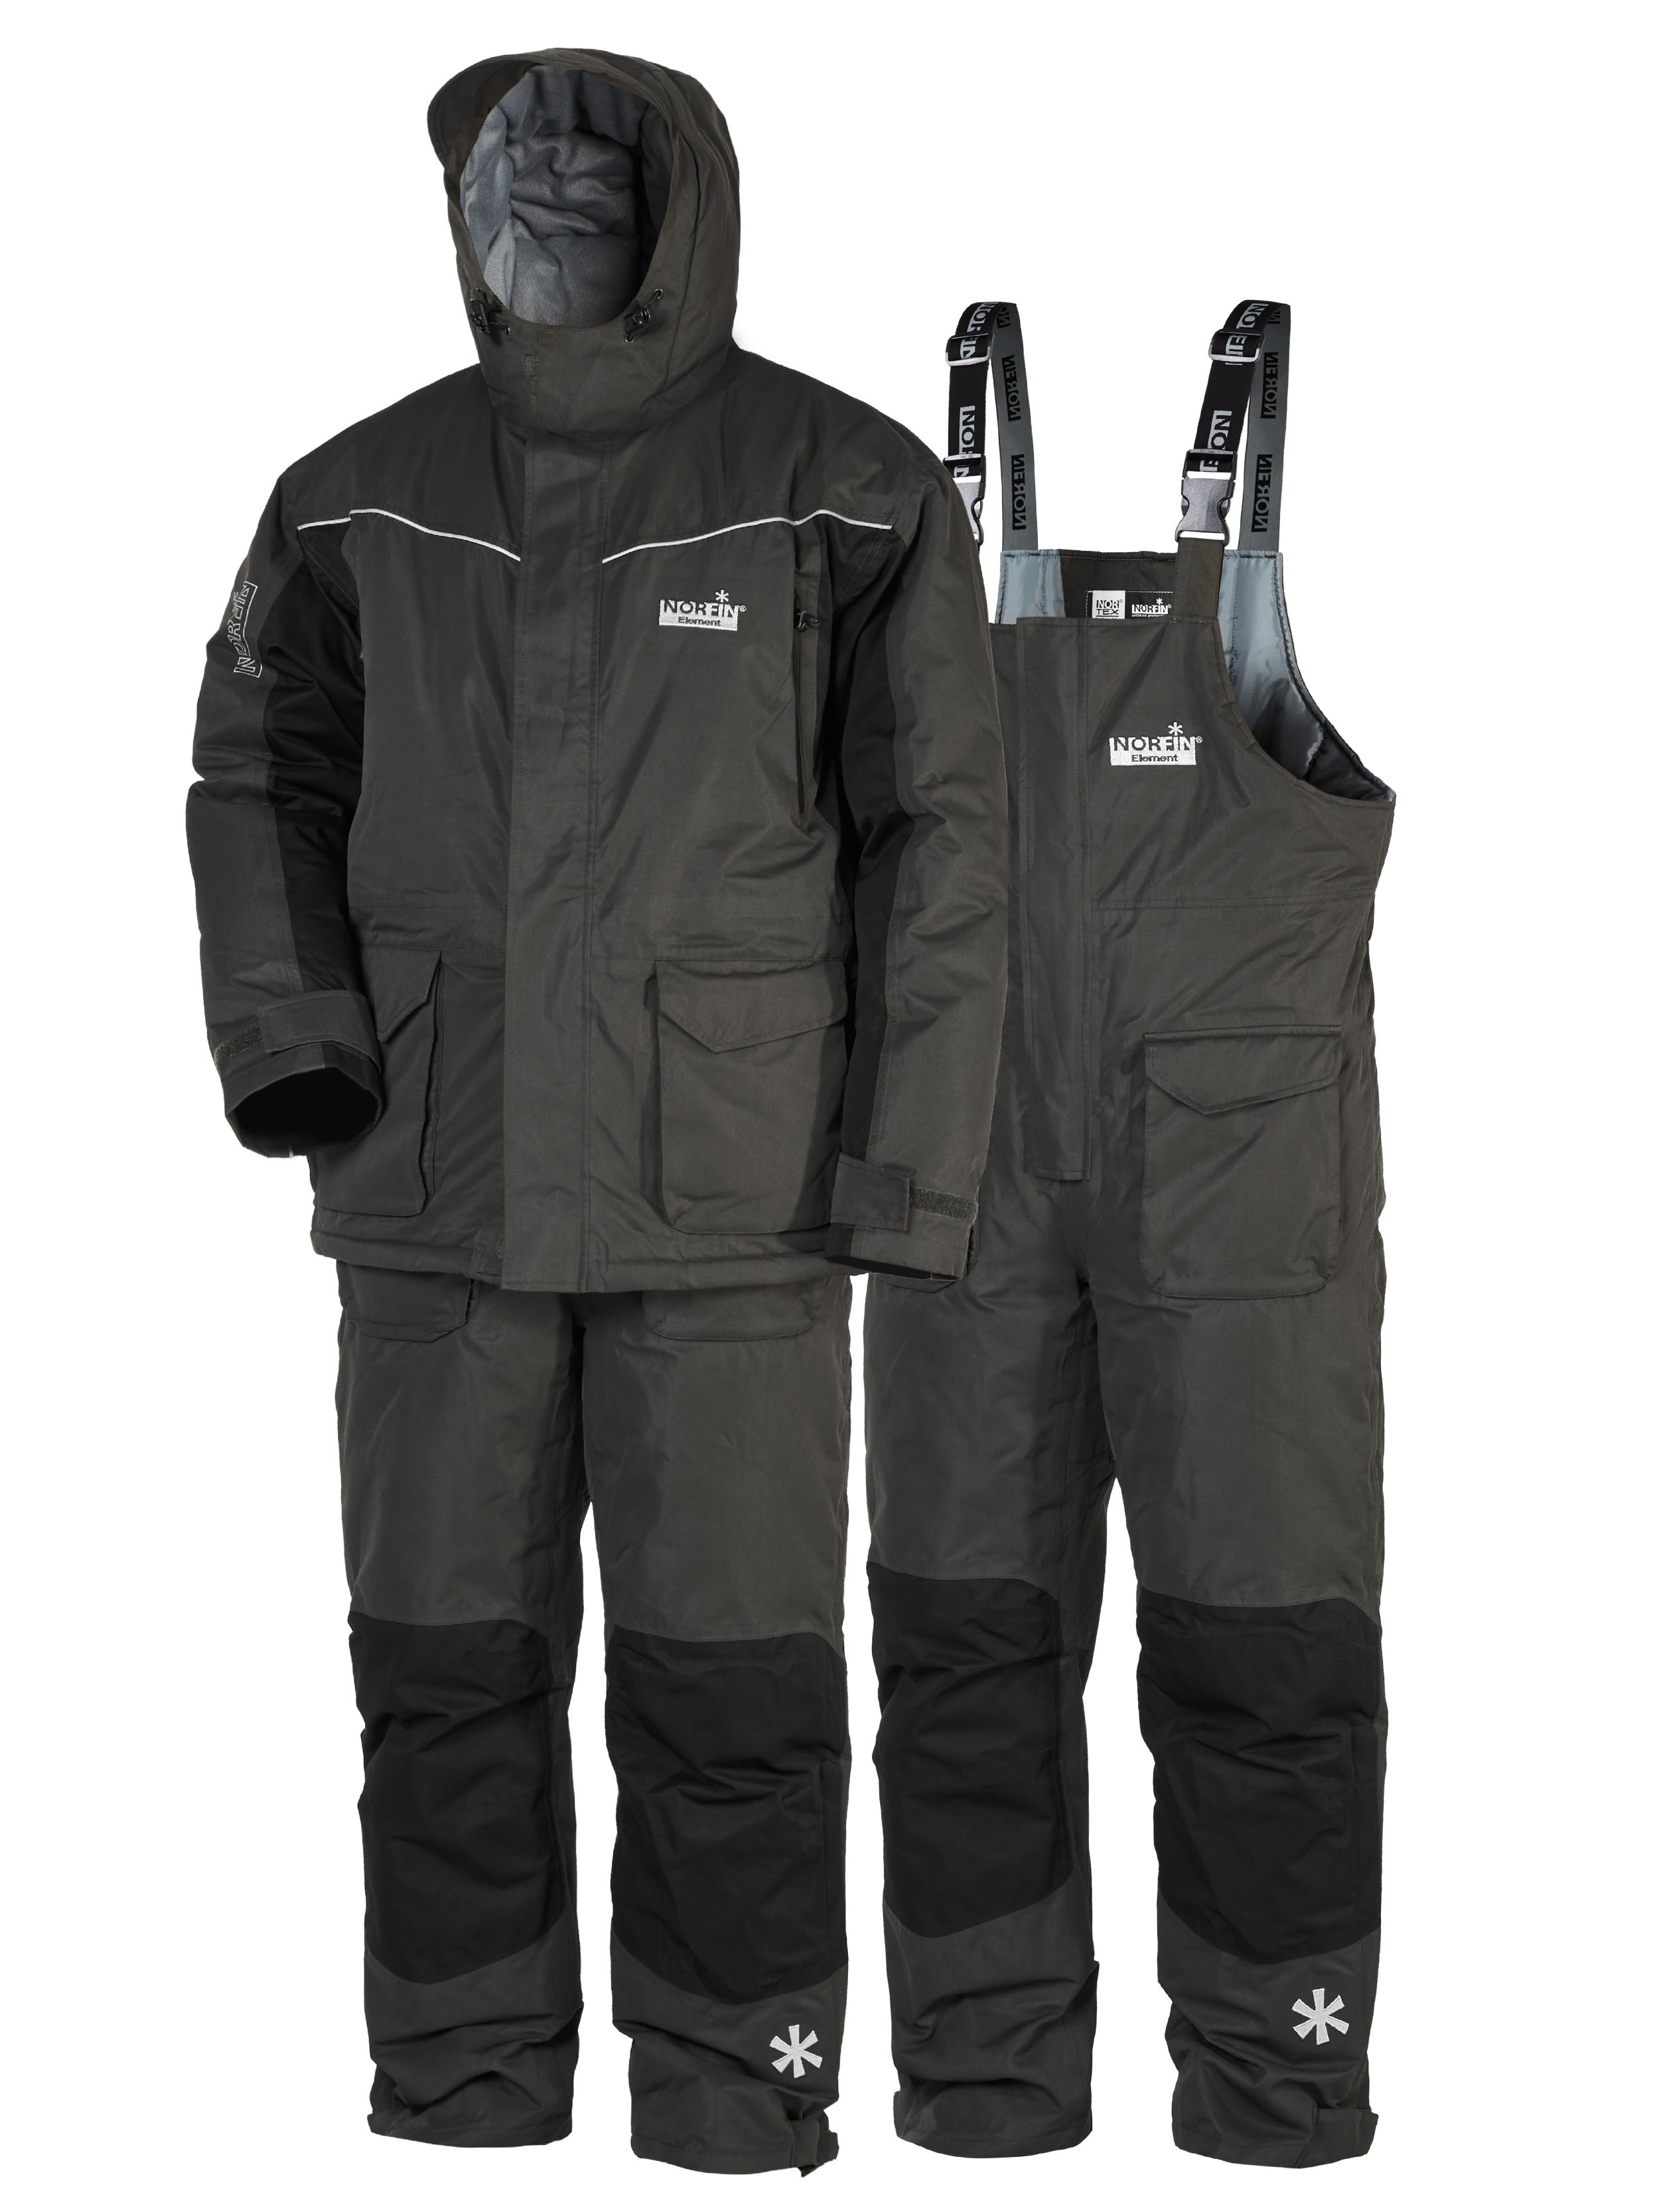 Fox Rage Winter Suit NEW Predator Fishing Waterproof Thermal Suit *All Sizes 